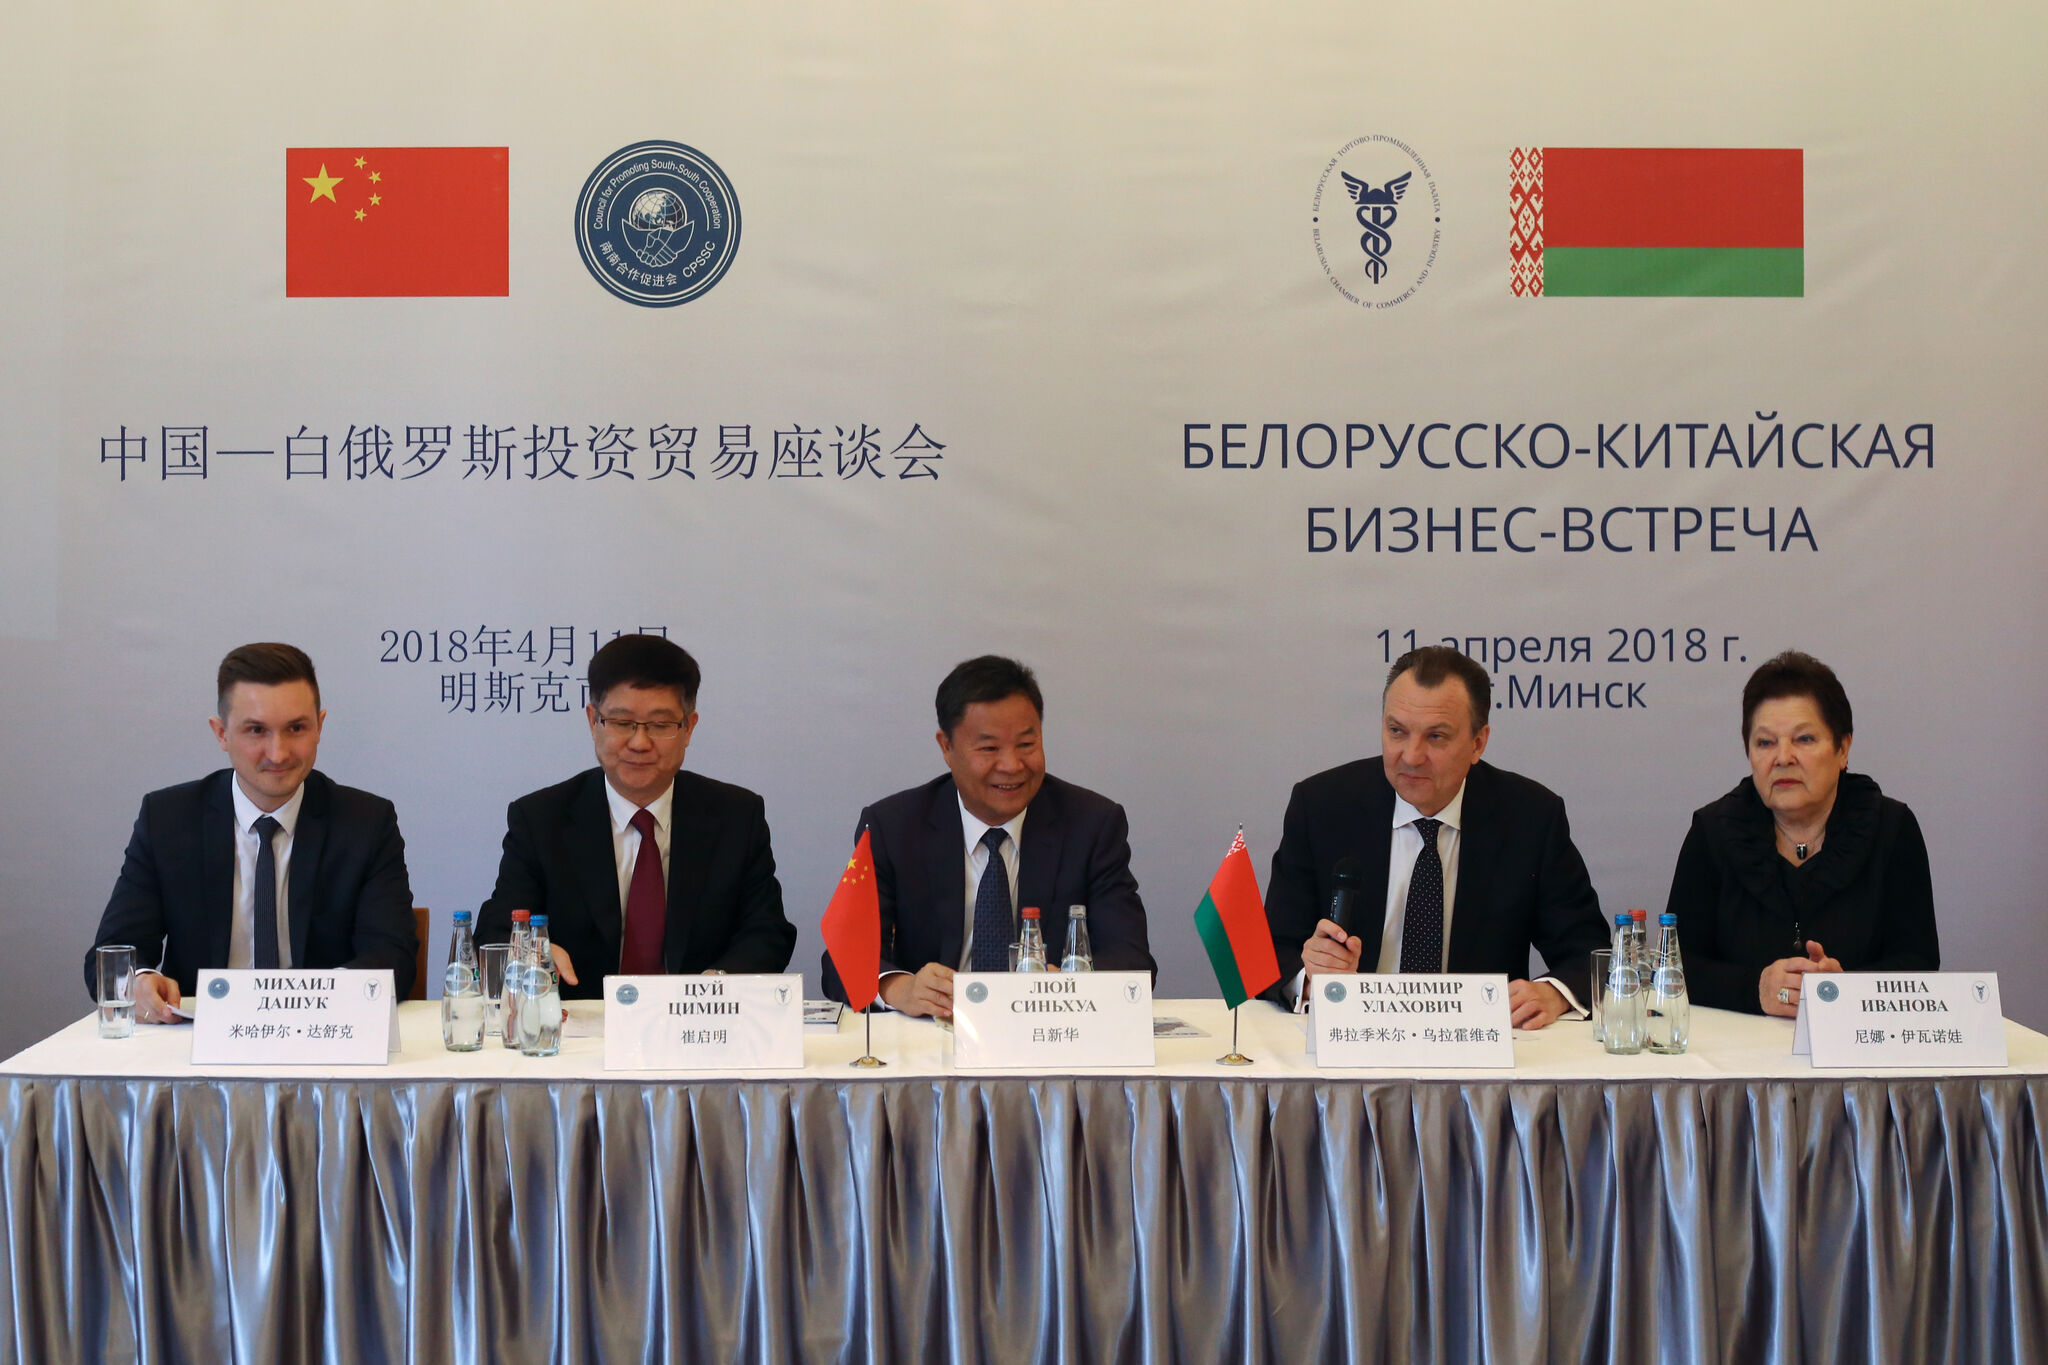 Belarus-China business meeting